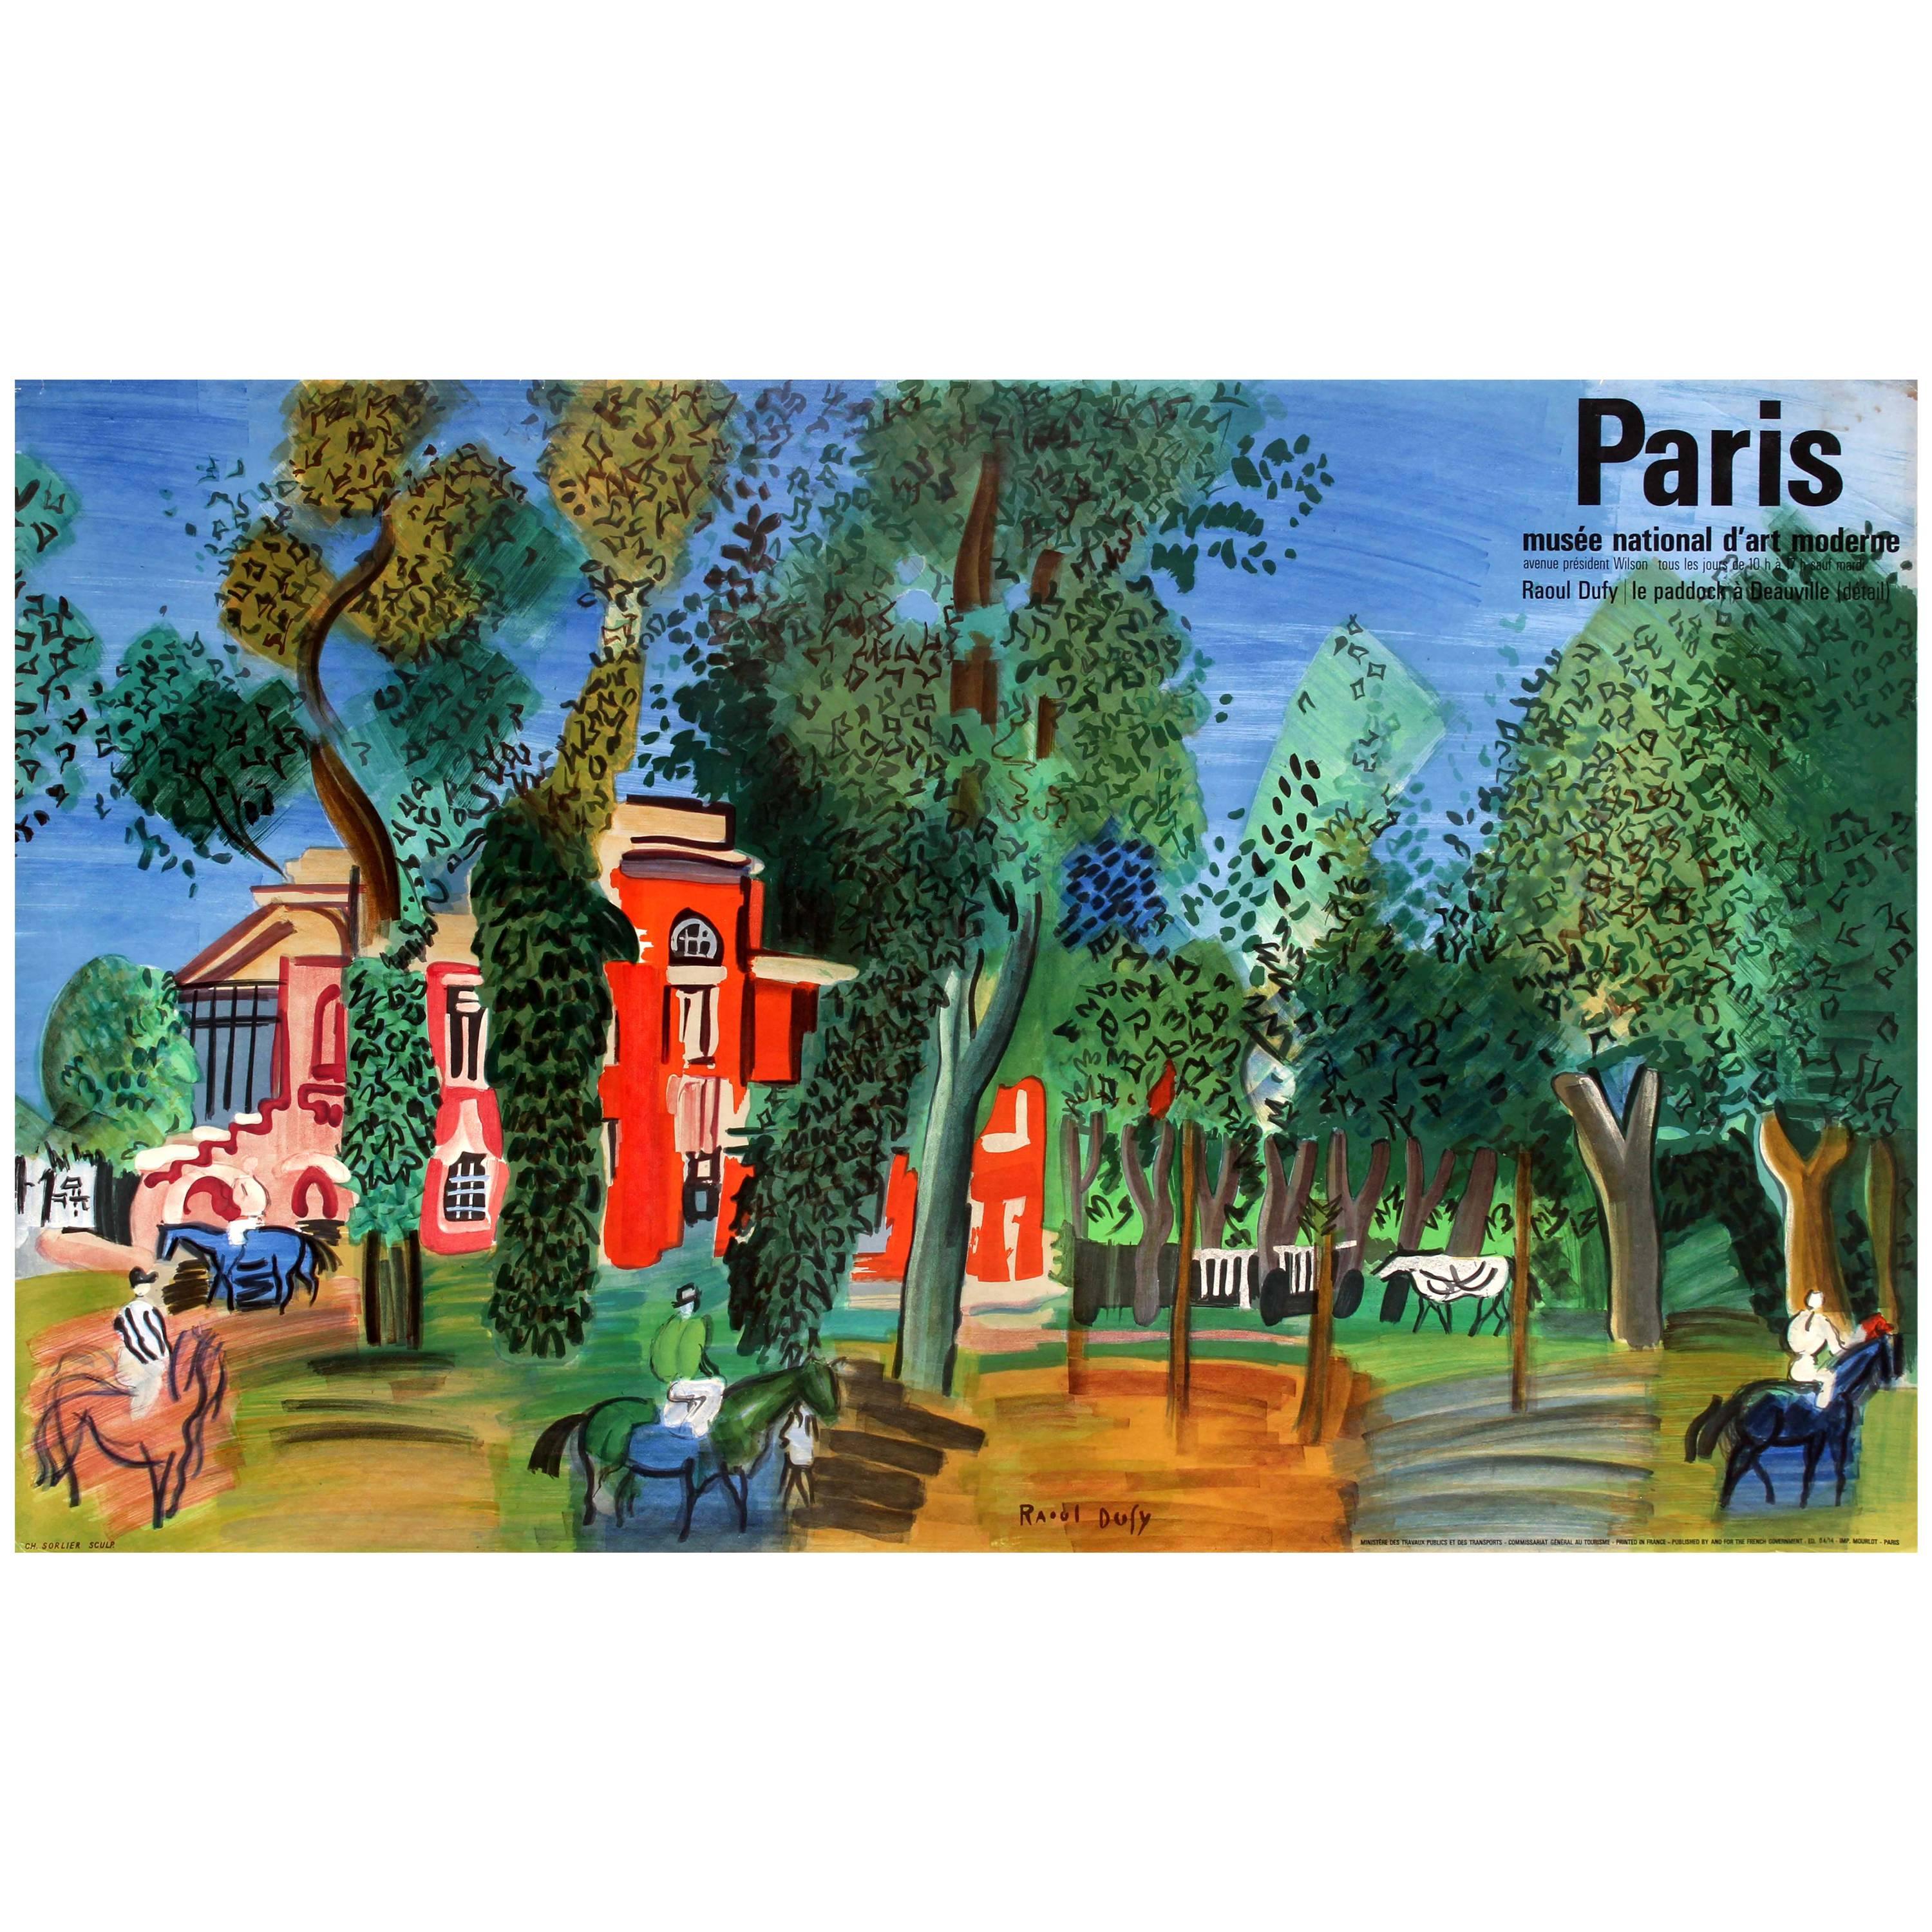 Original Vintage Paris Museum of Modern Art Poster - The Paddock at Deauville